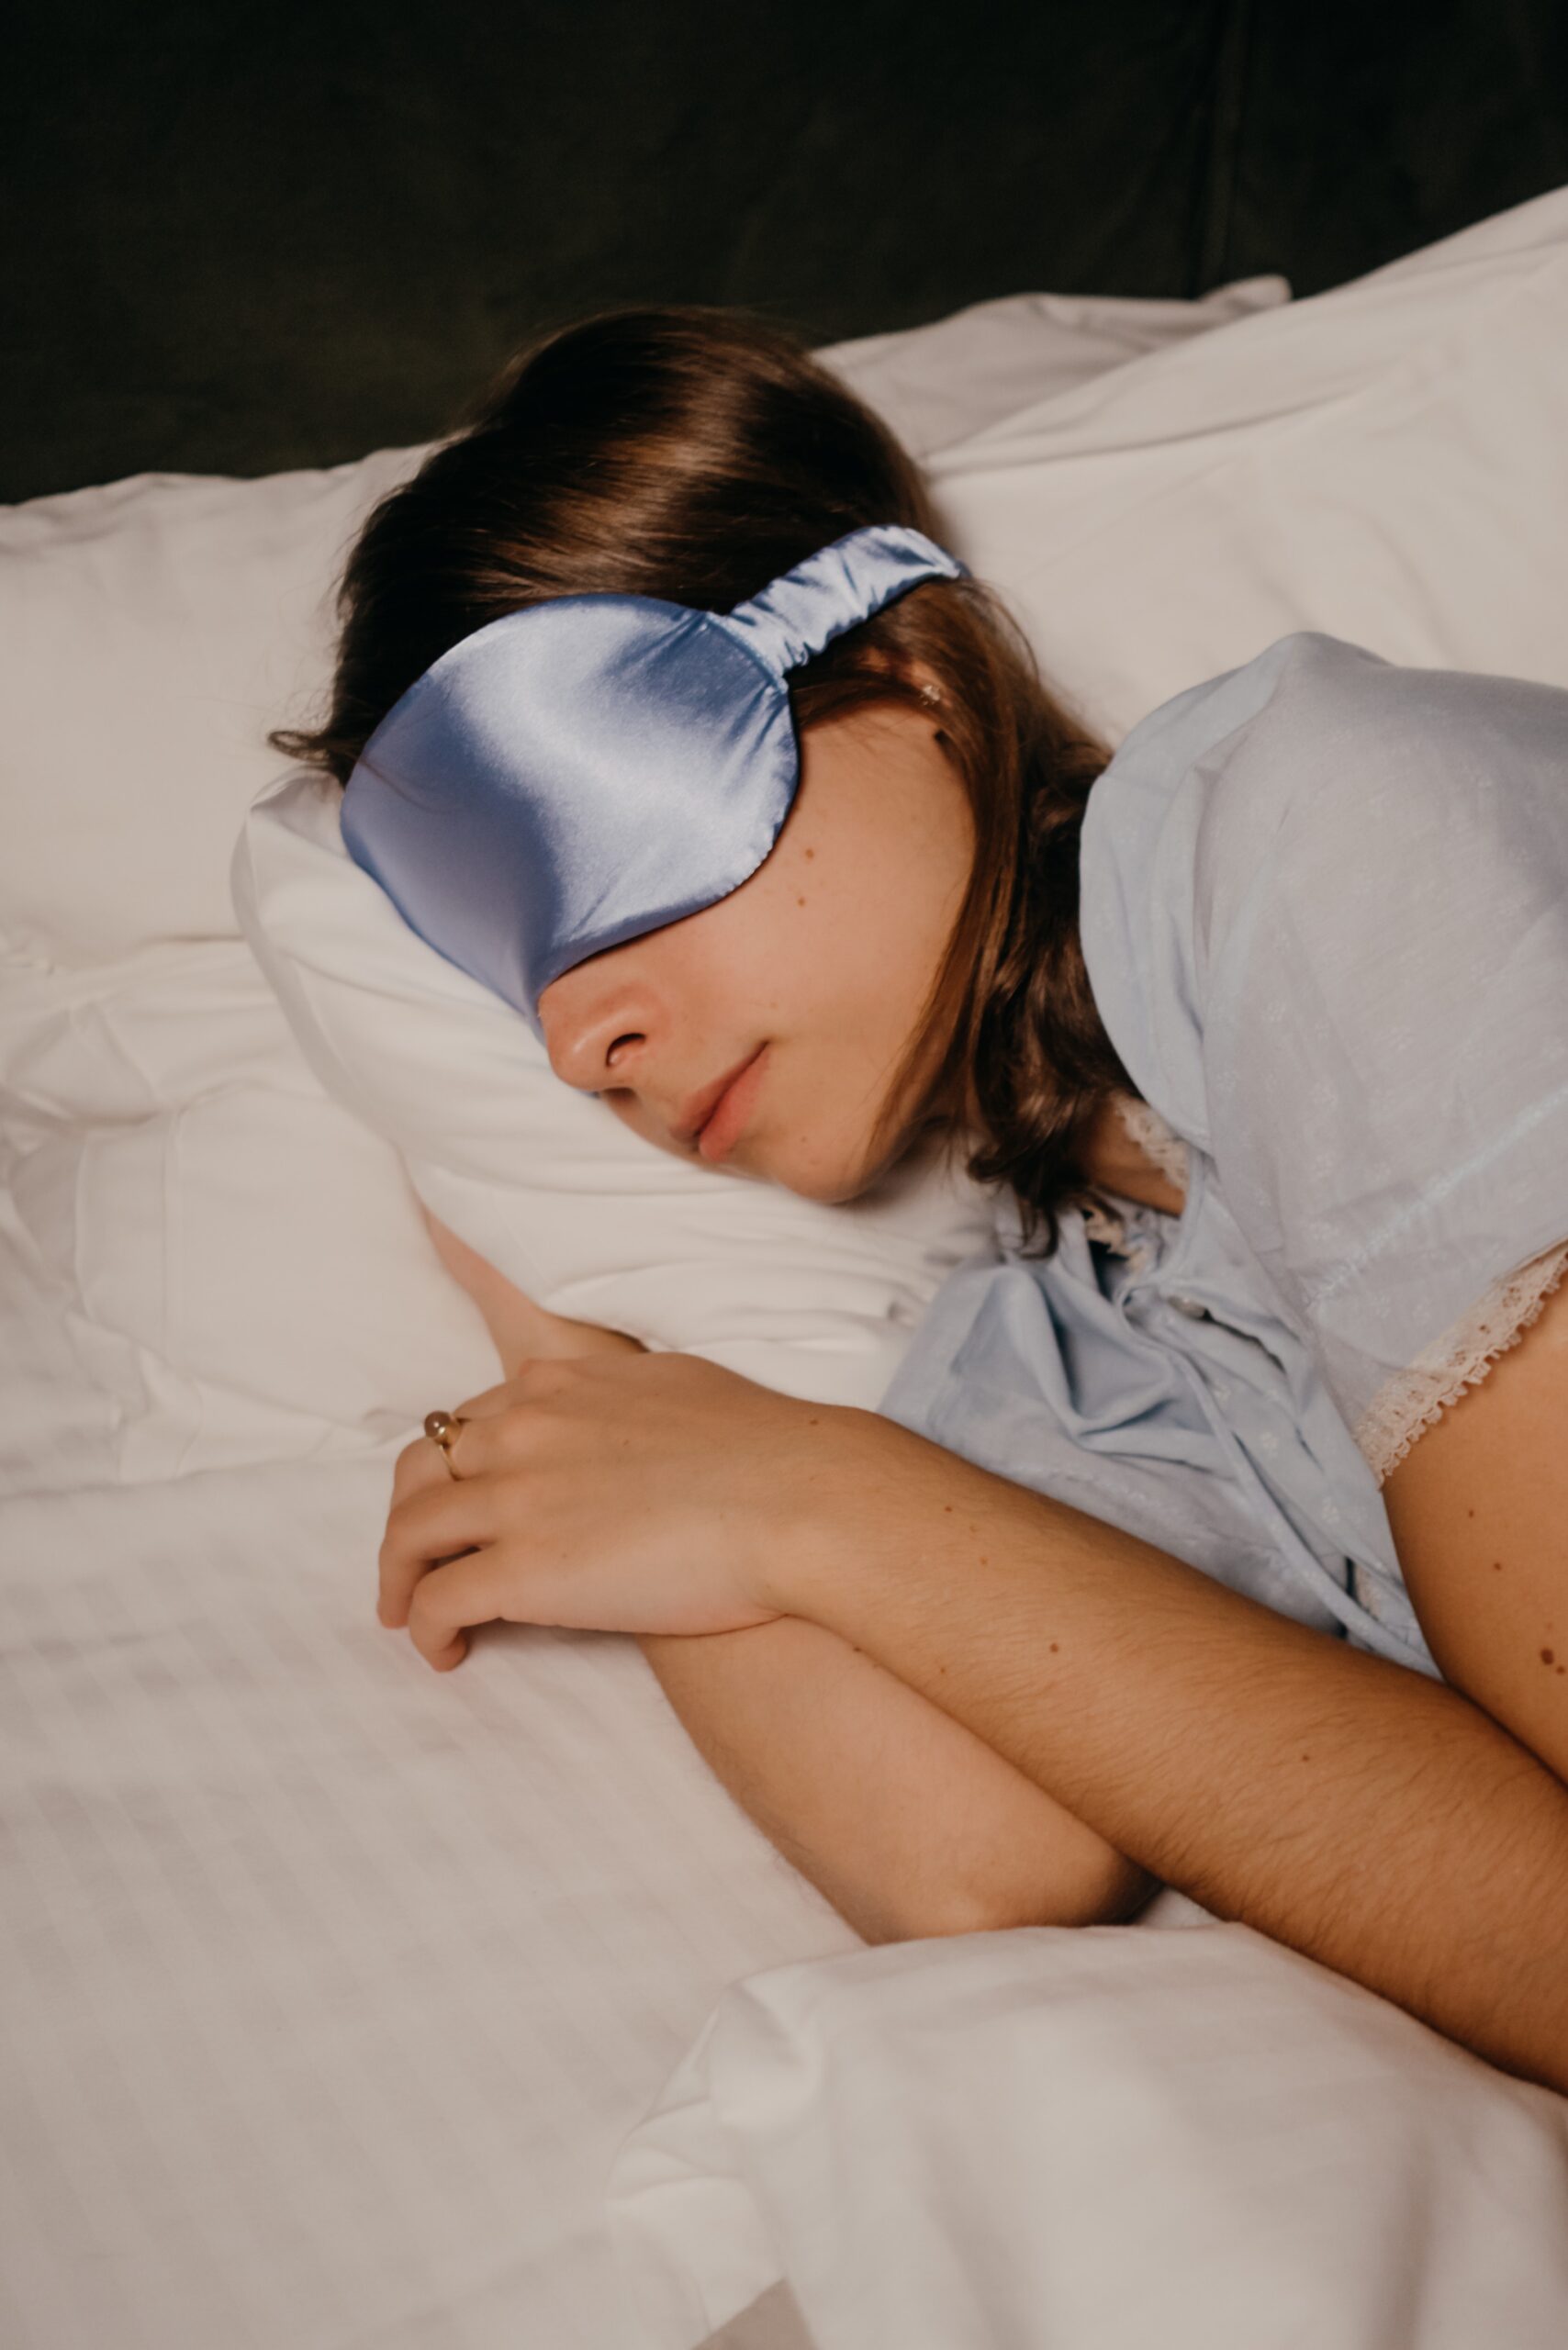 A woman wearing an eye mask and sleeping